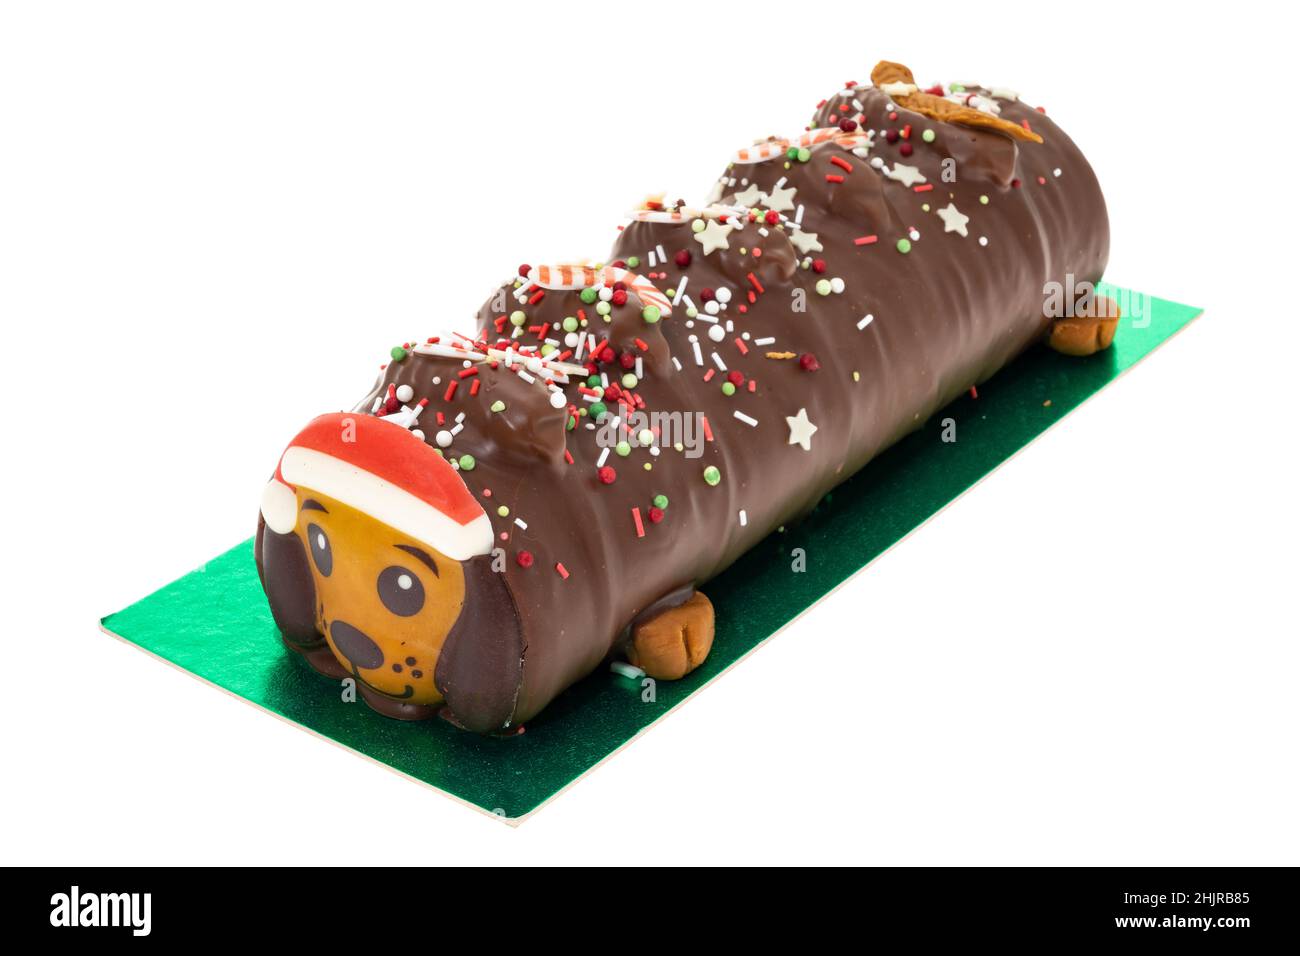 A Christmas themed dog shaped chocolate yule log - white background Stock Photo